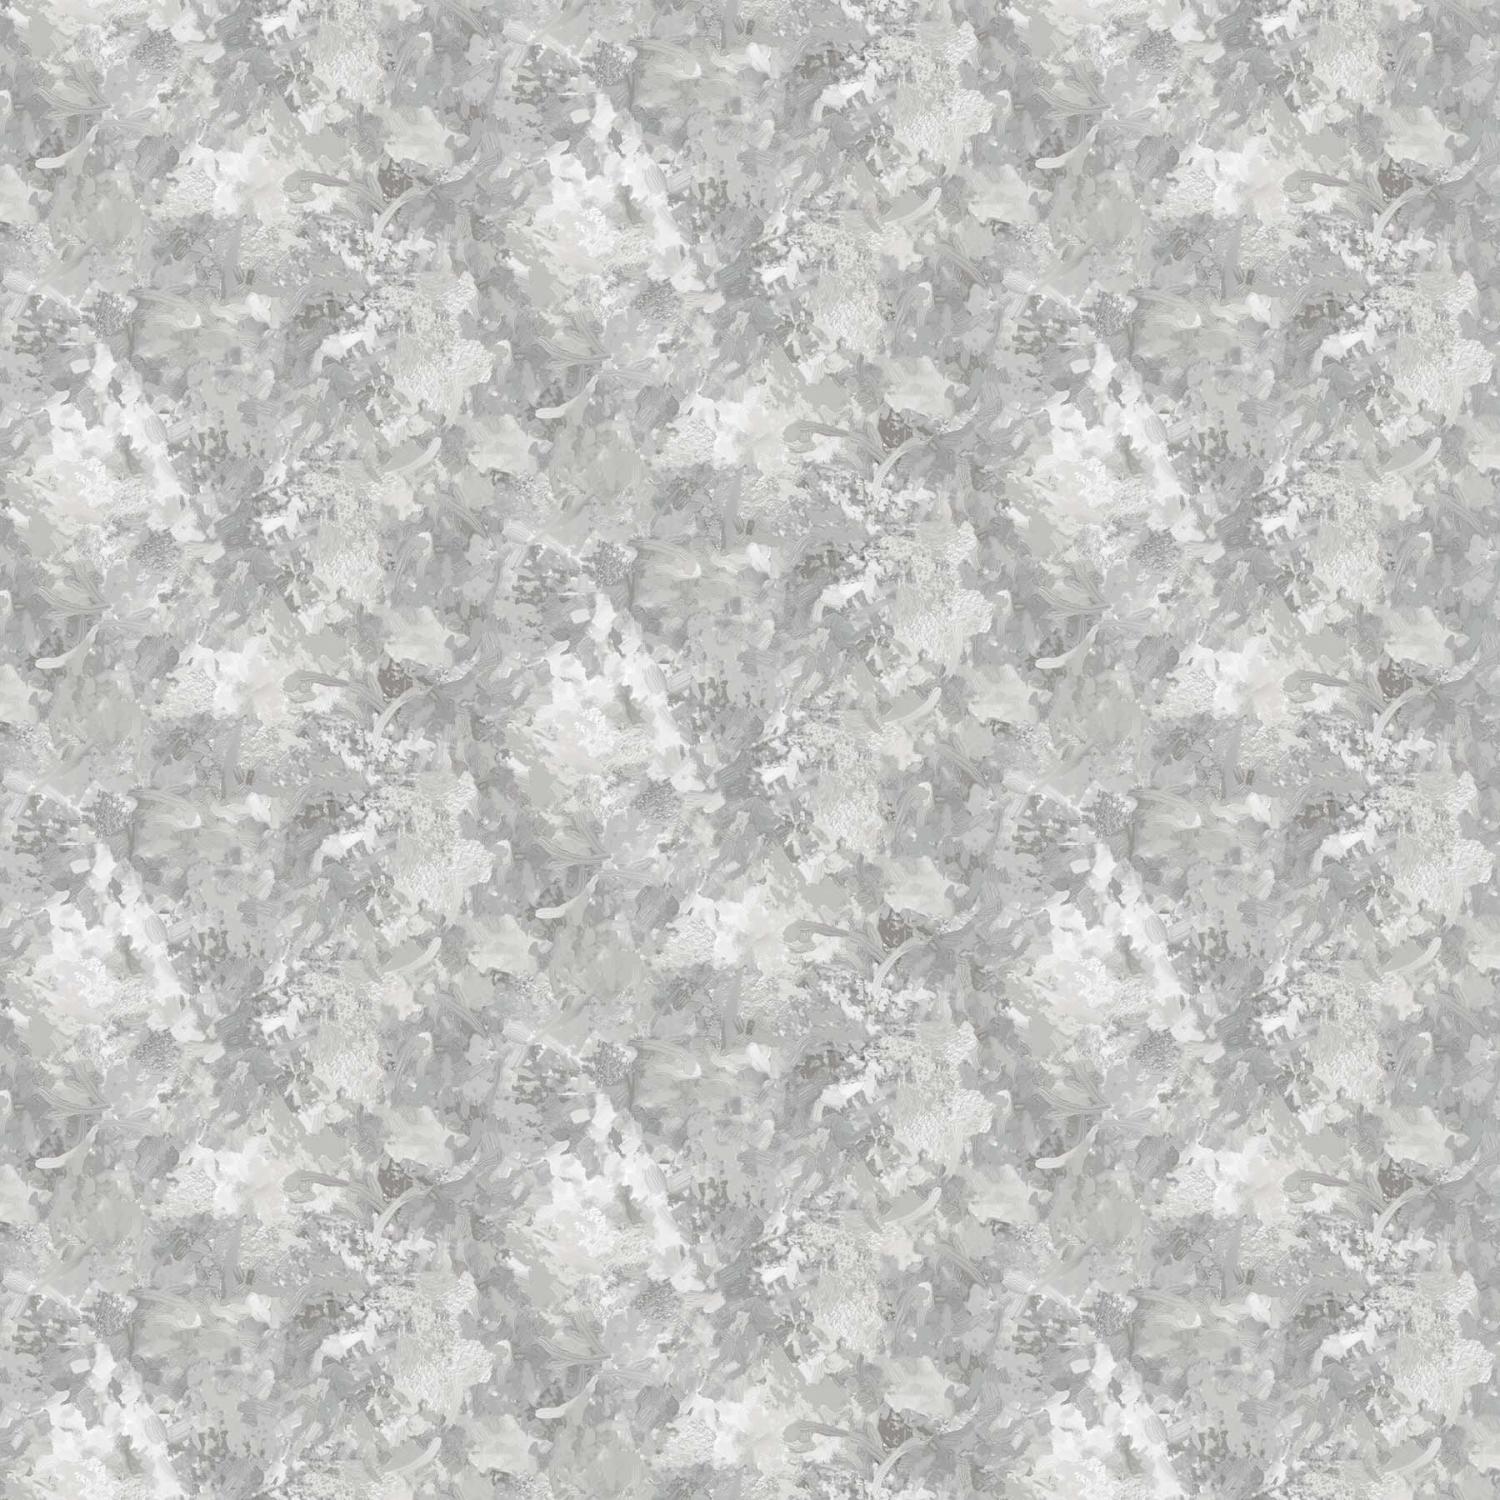 Chroma - Medium Light Grey/Gray - 9060-93